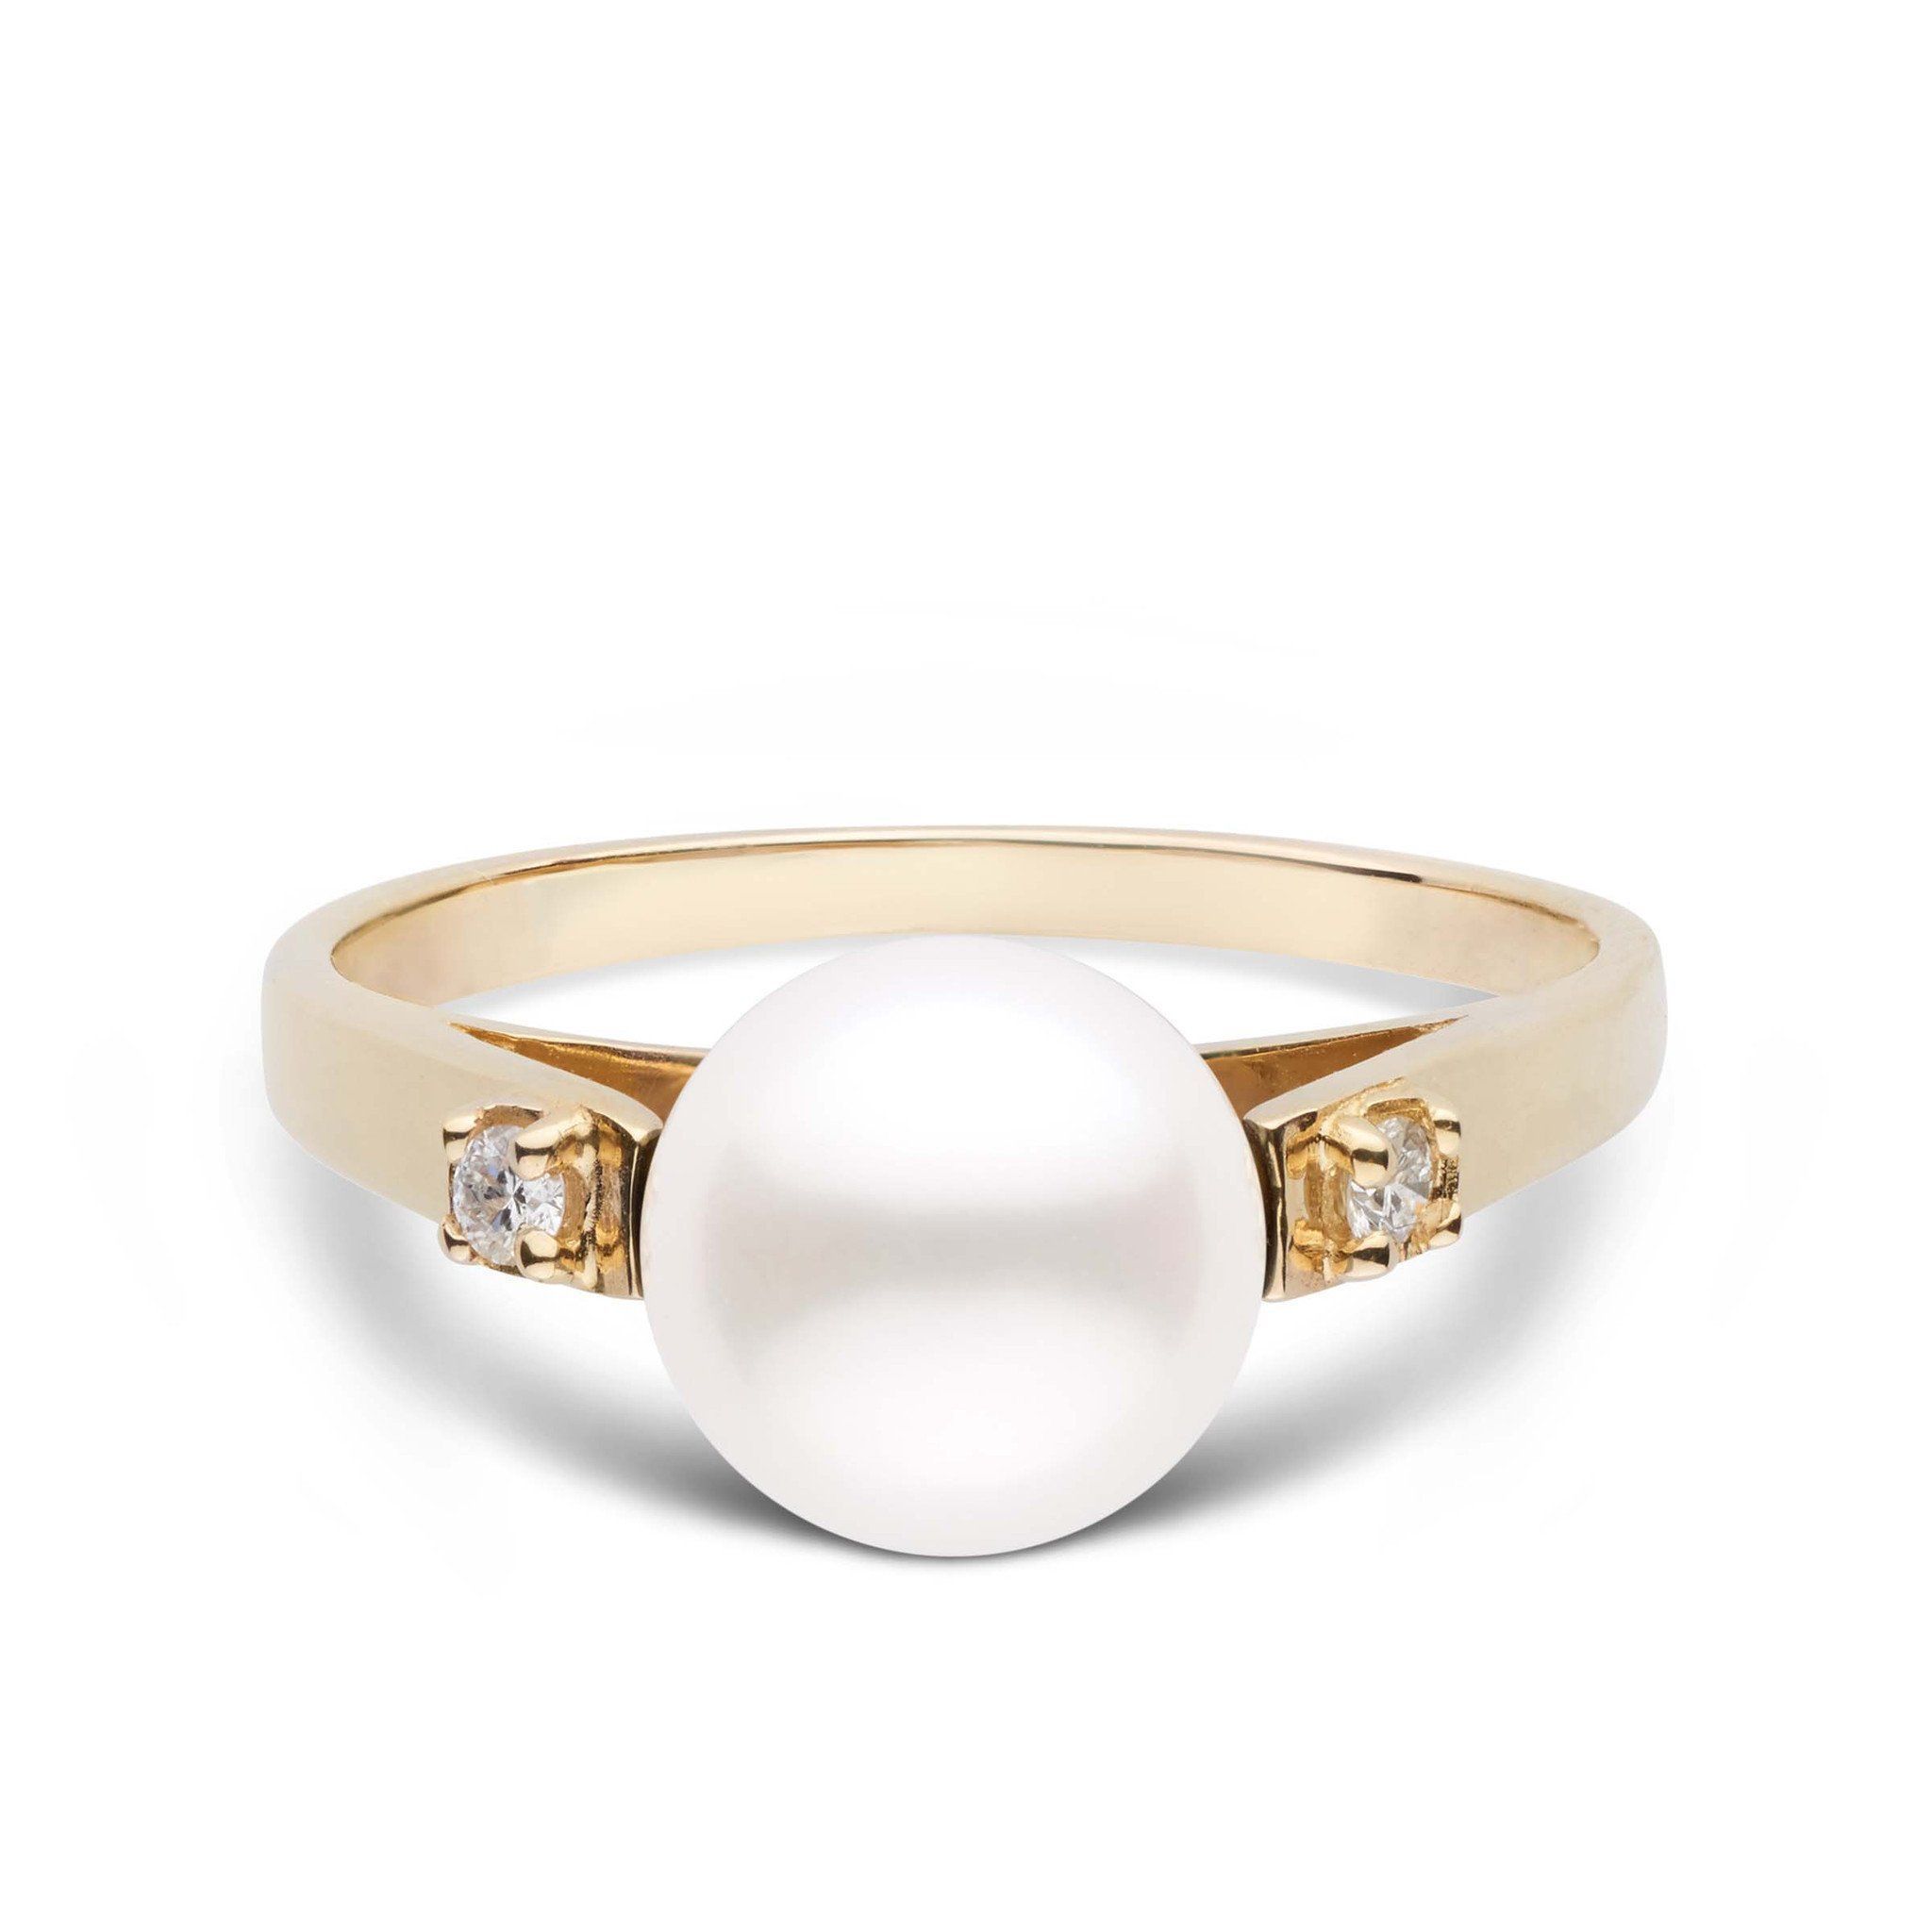 Pearl Rings - genuine, certified and guaranteed